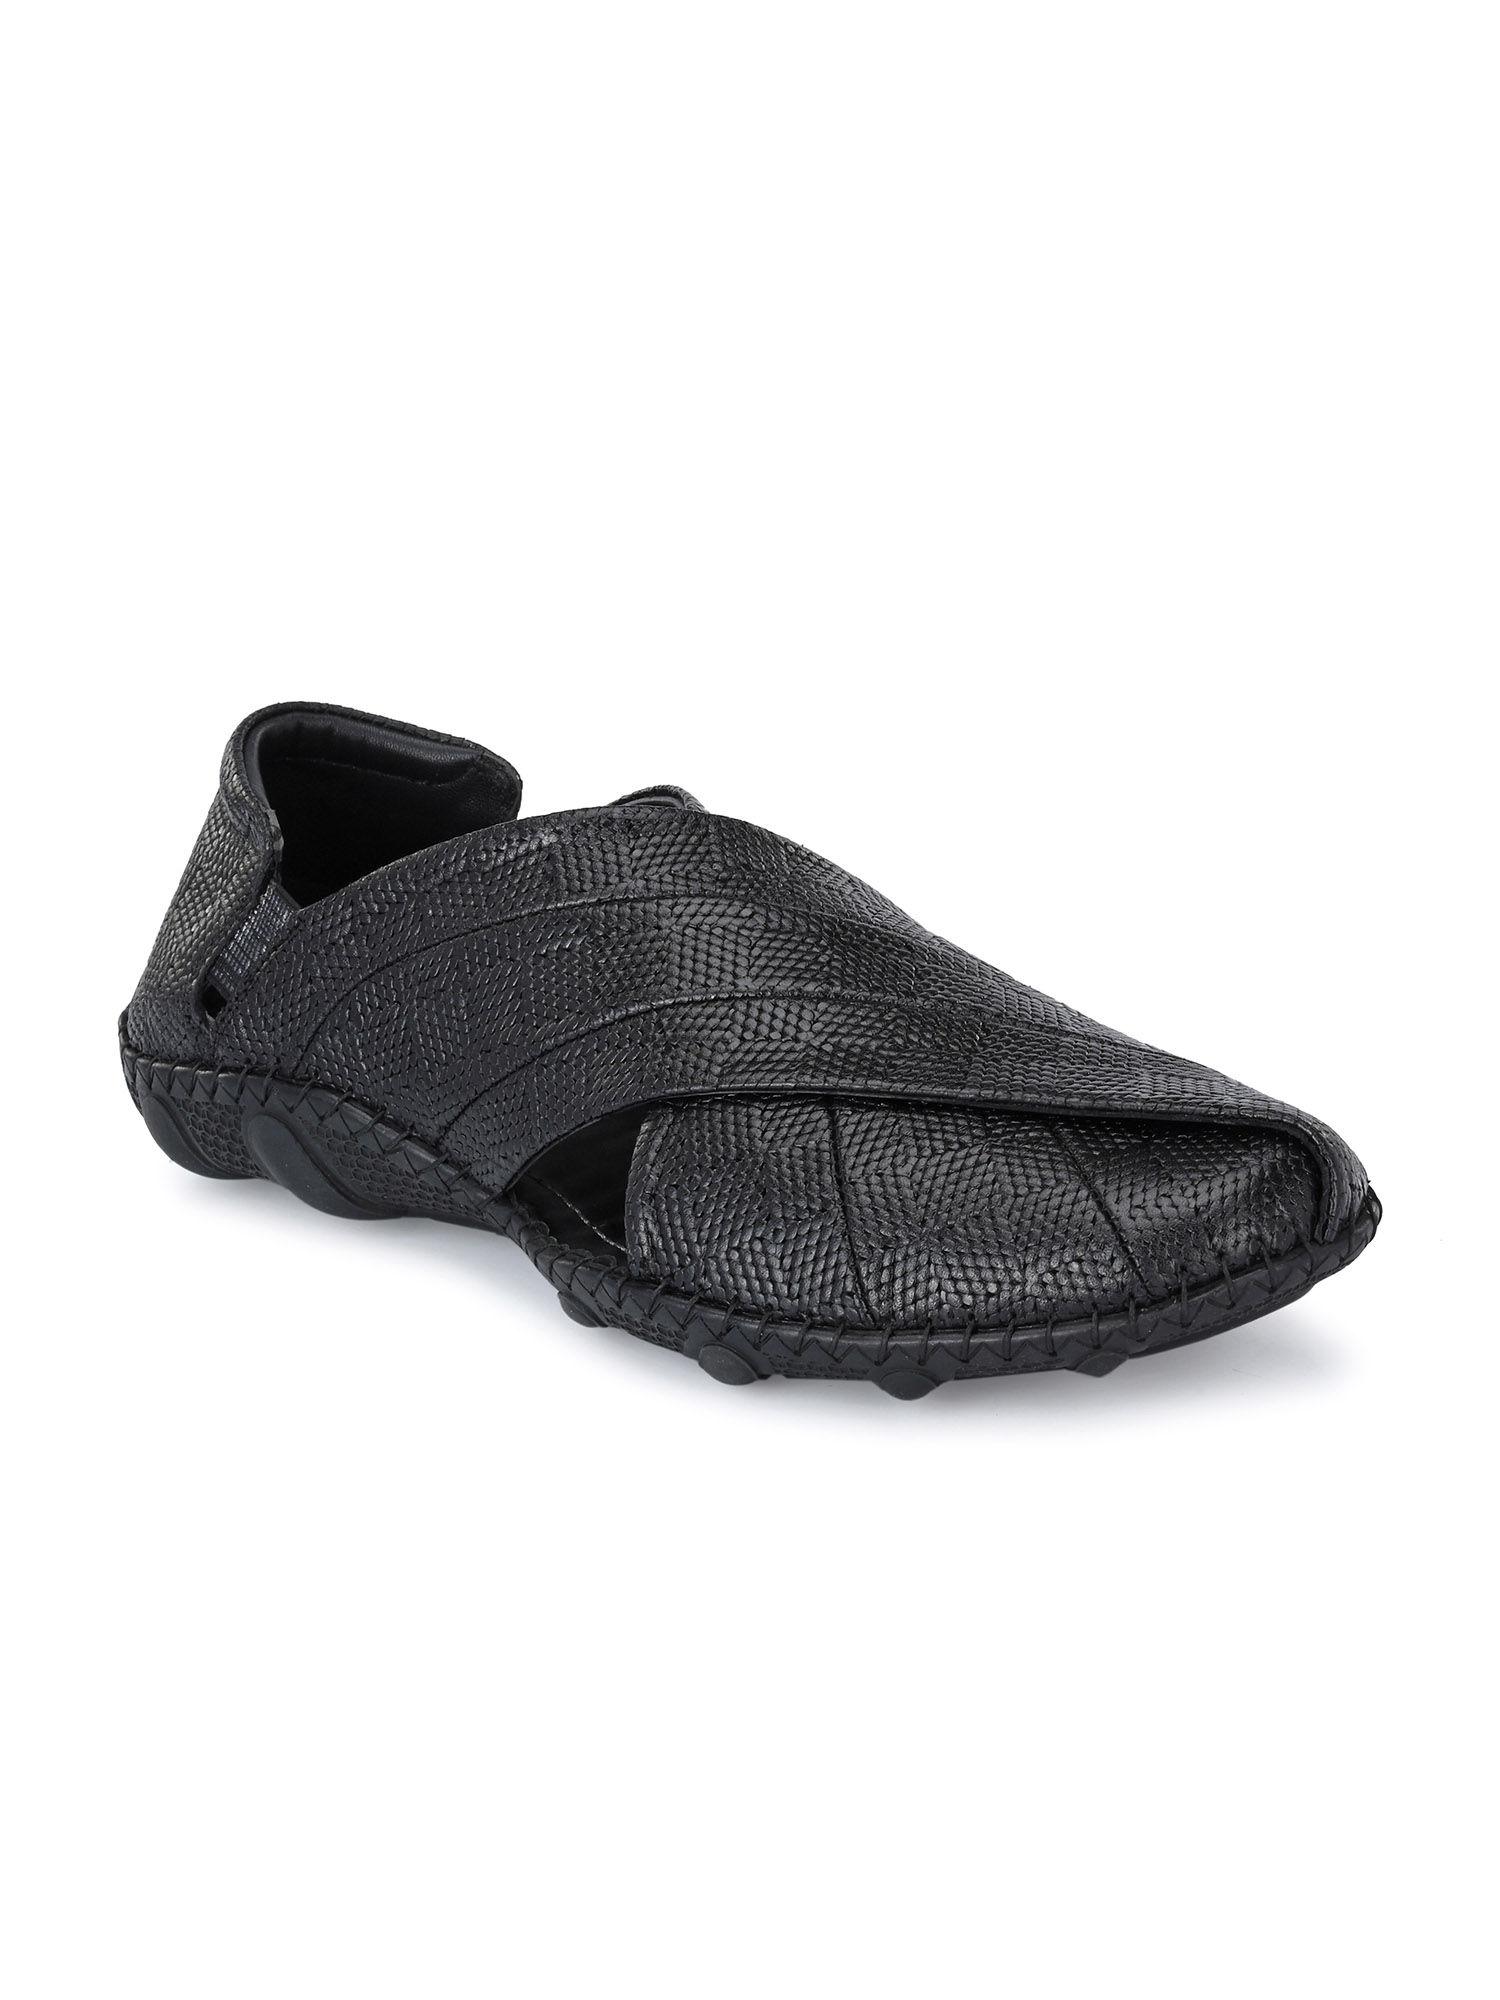 Men Black Leather Casual Sandals